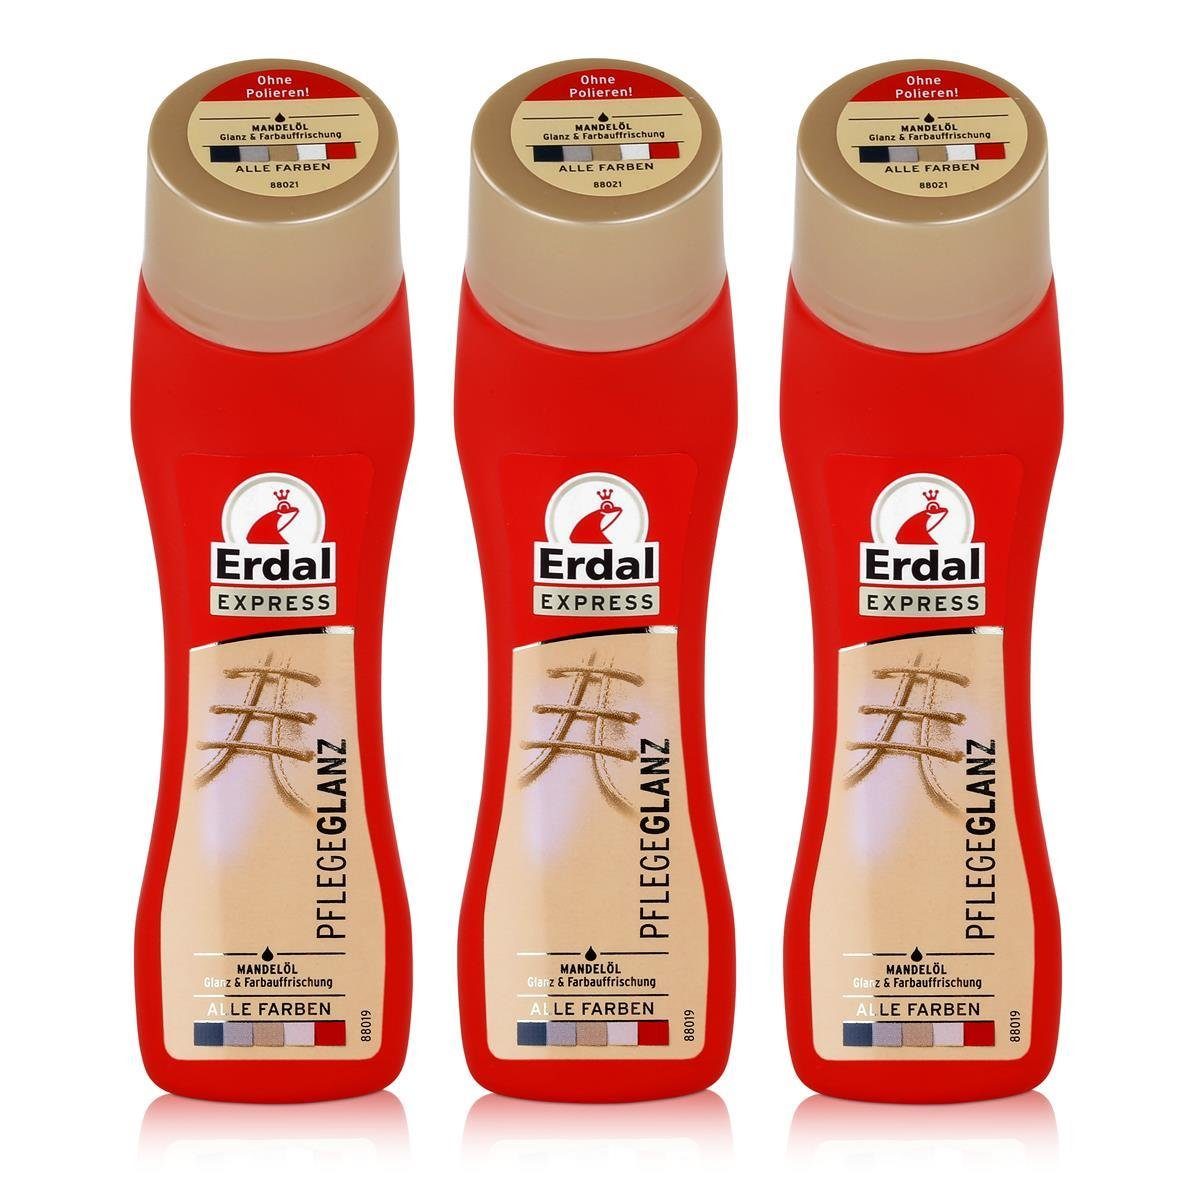 Erdal Erdal Express Pflegeglanz alle Farben 75ml - Mit Mandelöl (3er Pack) Reinigungstücher